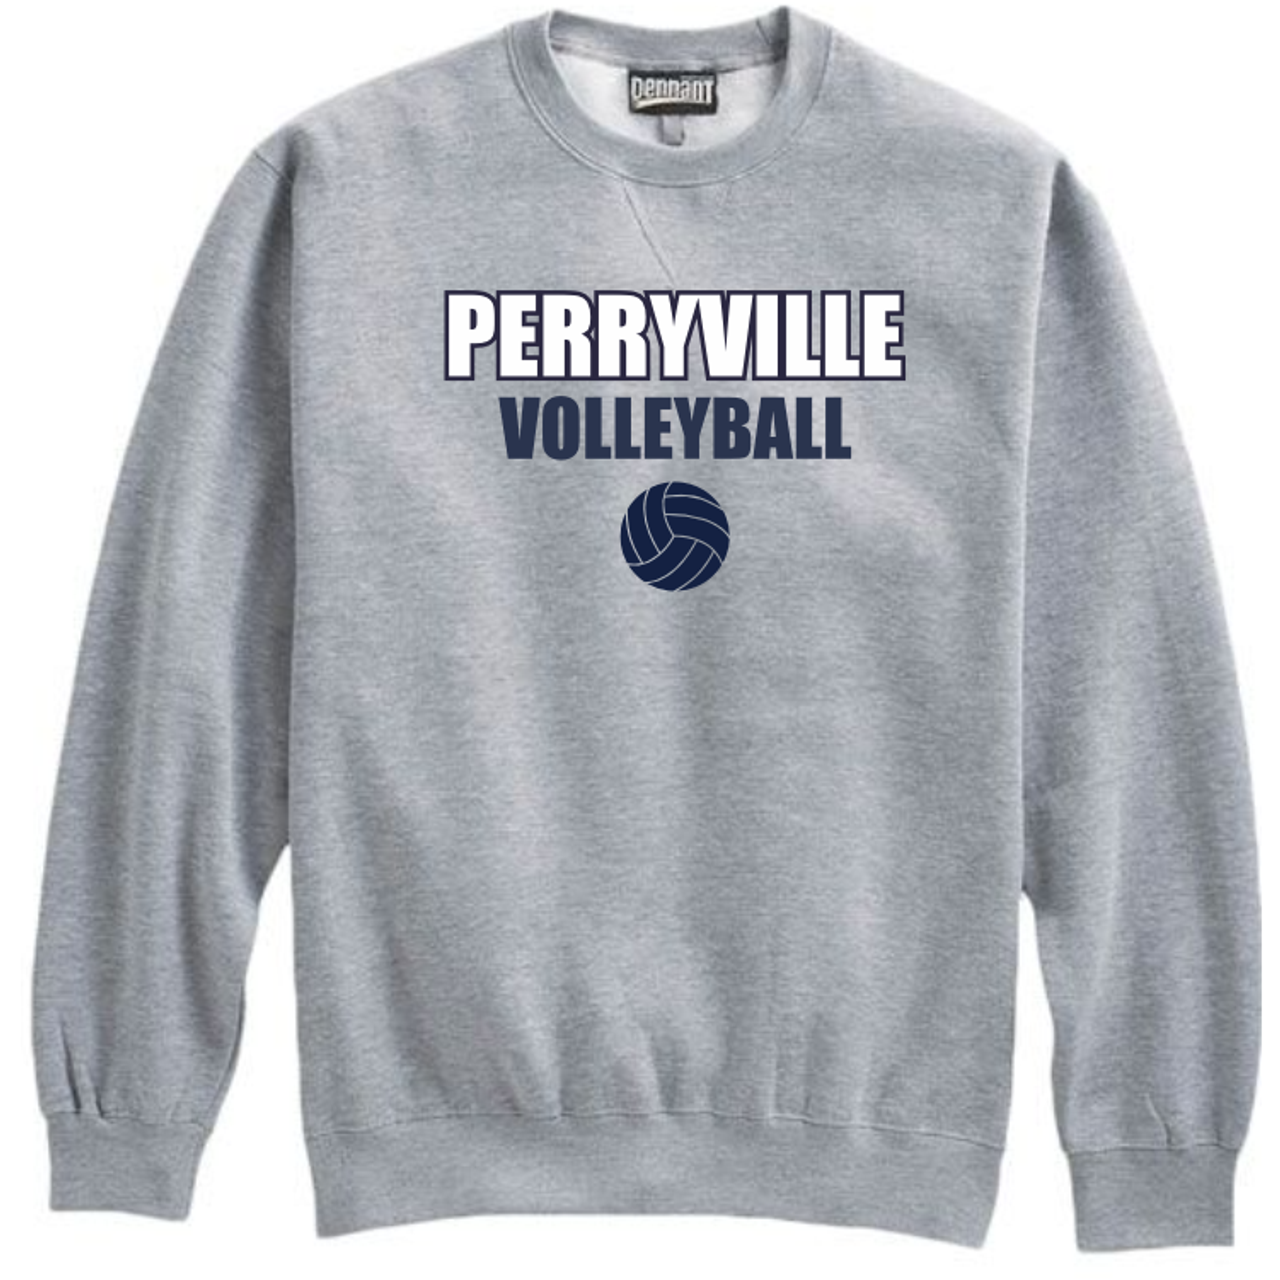 Perryville Volleyball Crewneck Sweatshirt, Gray